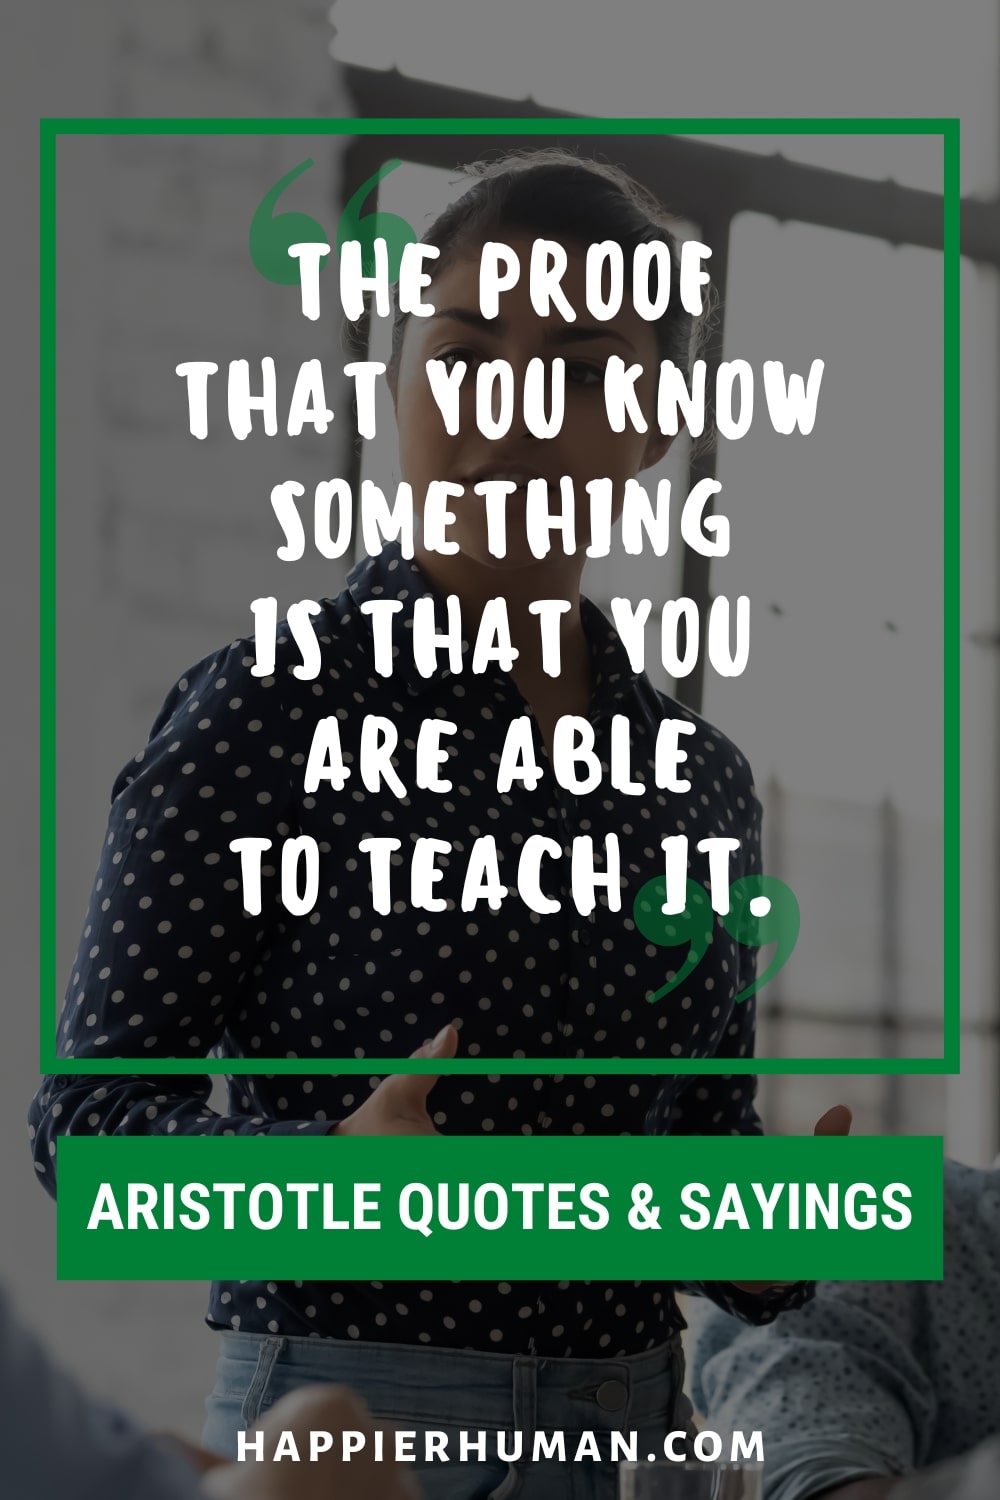 aristotle on education quotes | aristotle quot | aristotle quotes about education